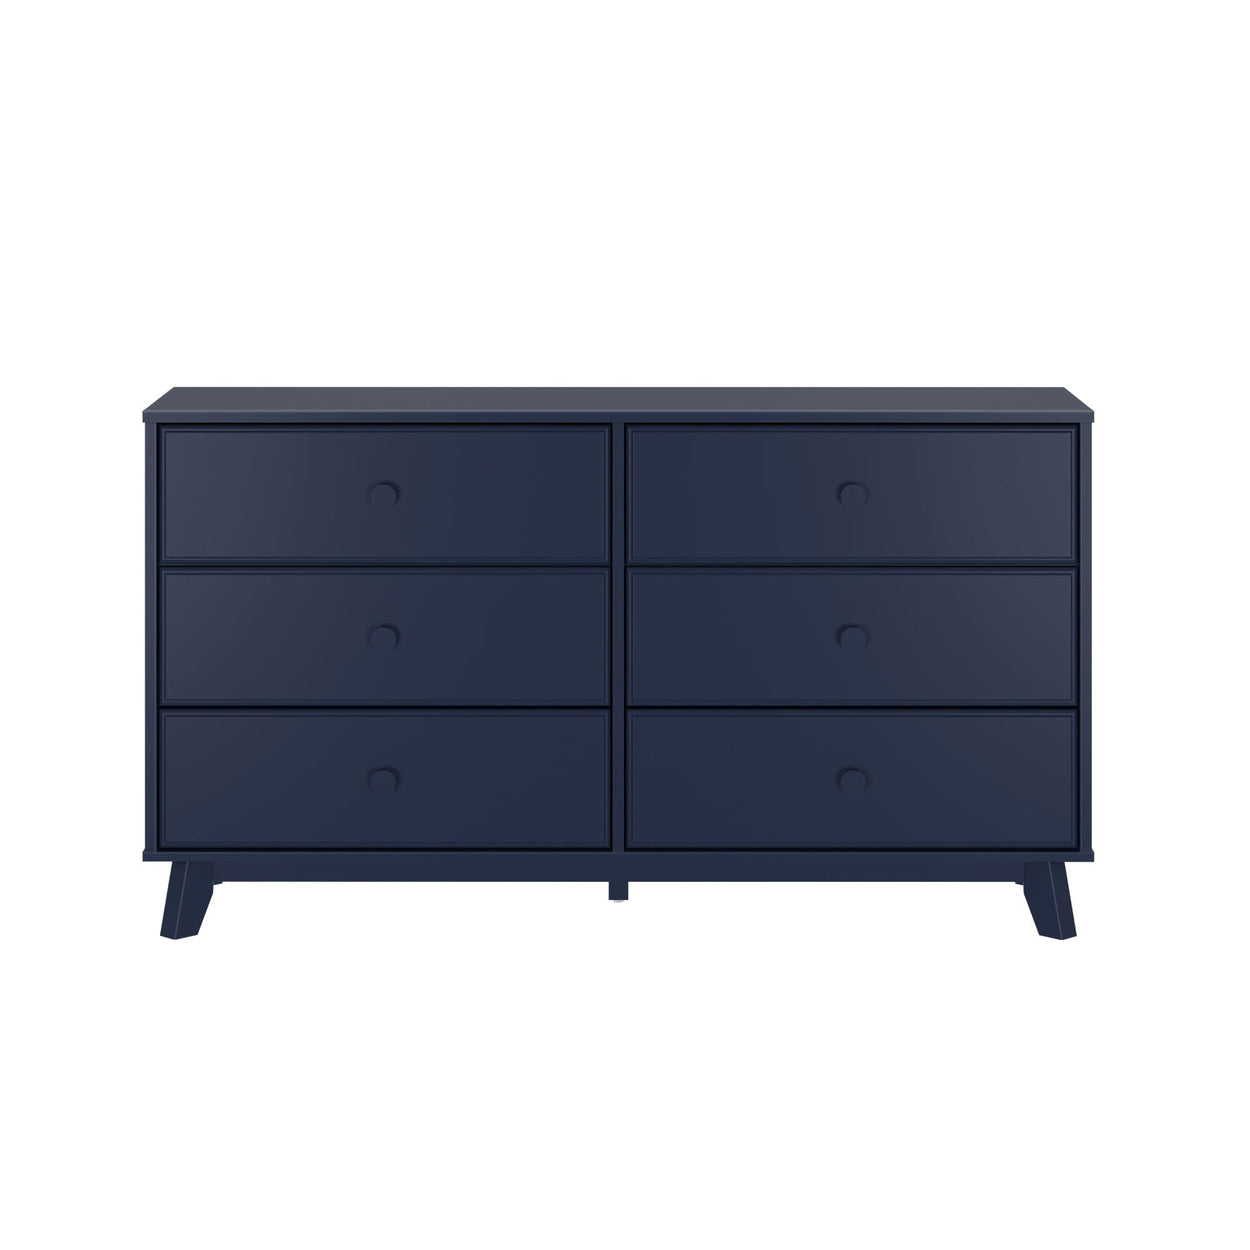 1800216000-131 : Furniture Max & Lily 6 Drawer Dresser, Blue